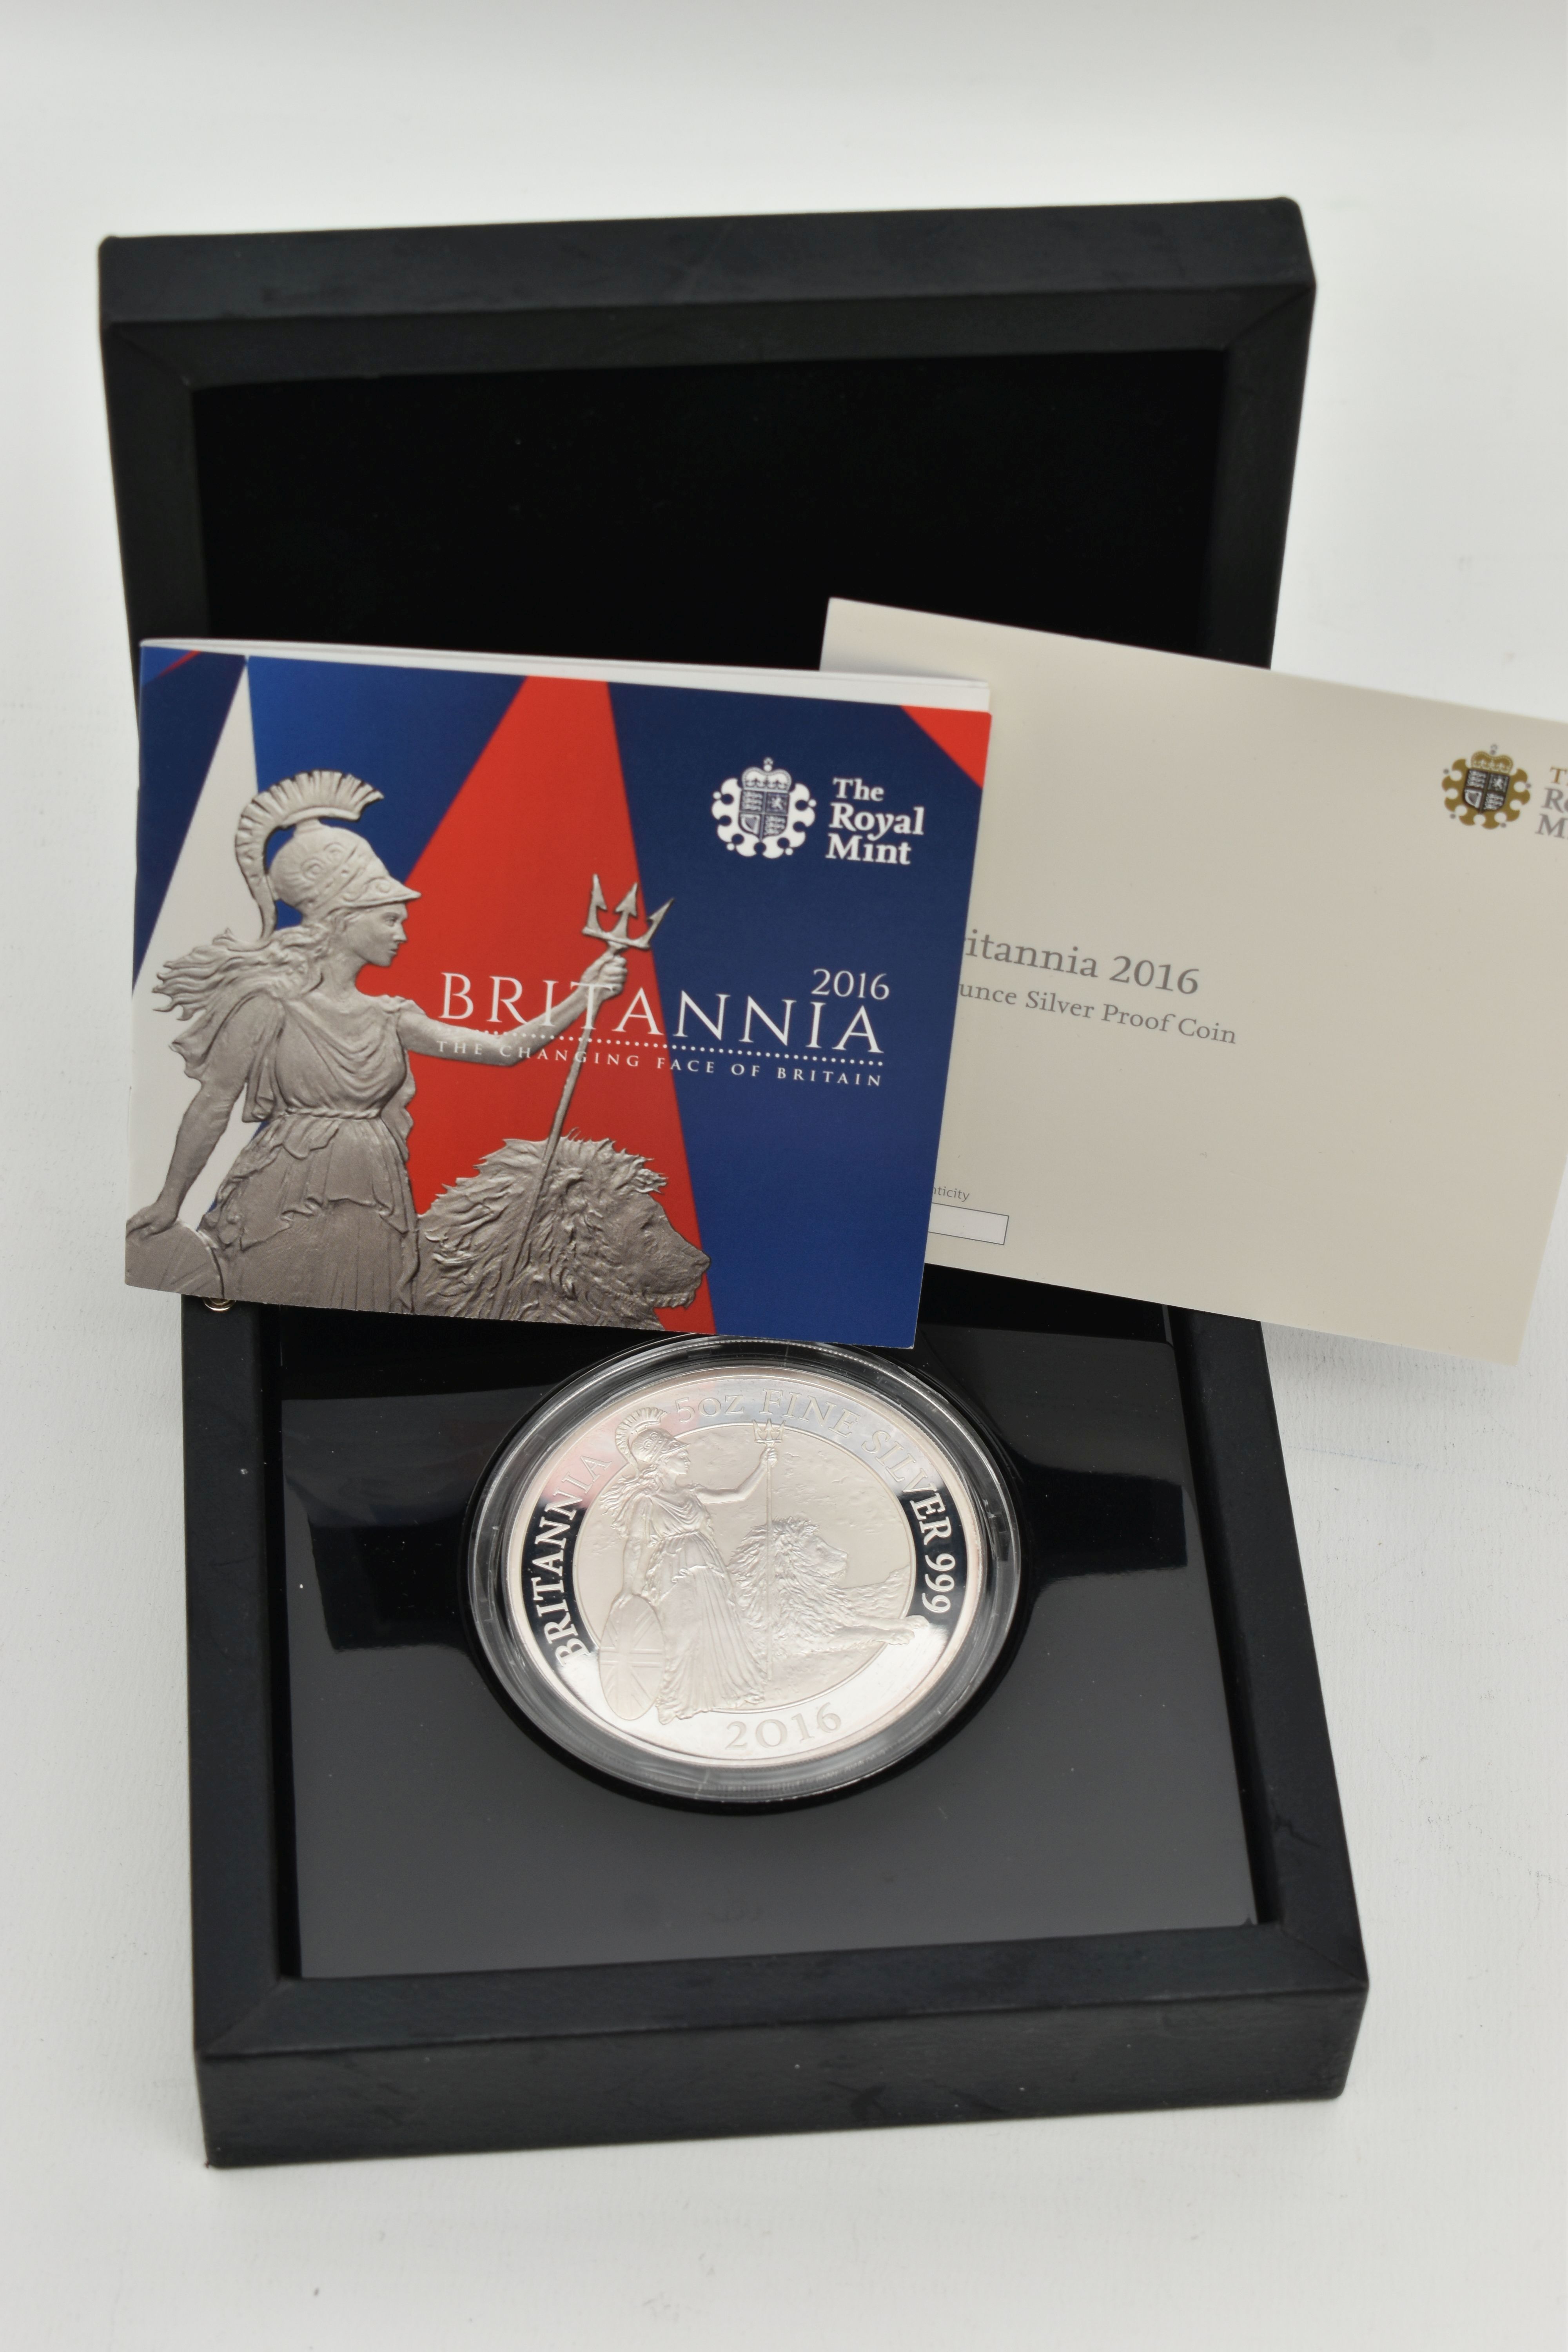 A BOXED ROYAL MINT 2016 £10 SILVER PROOF BRITANNIA COIN, 156.295 gram, 999 Silver max mintage 800